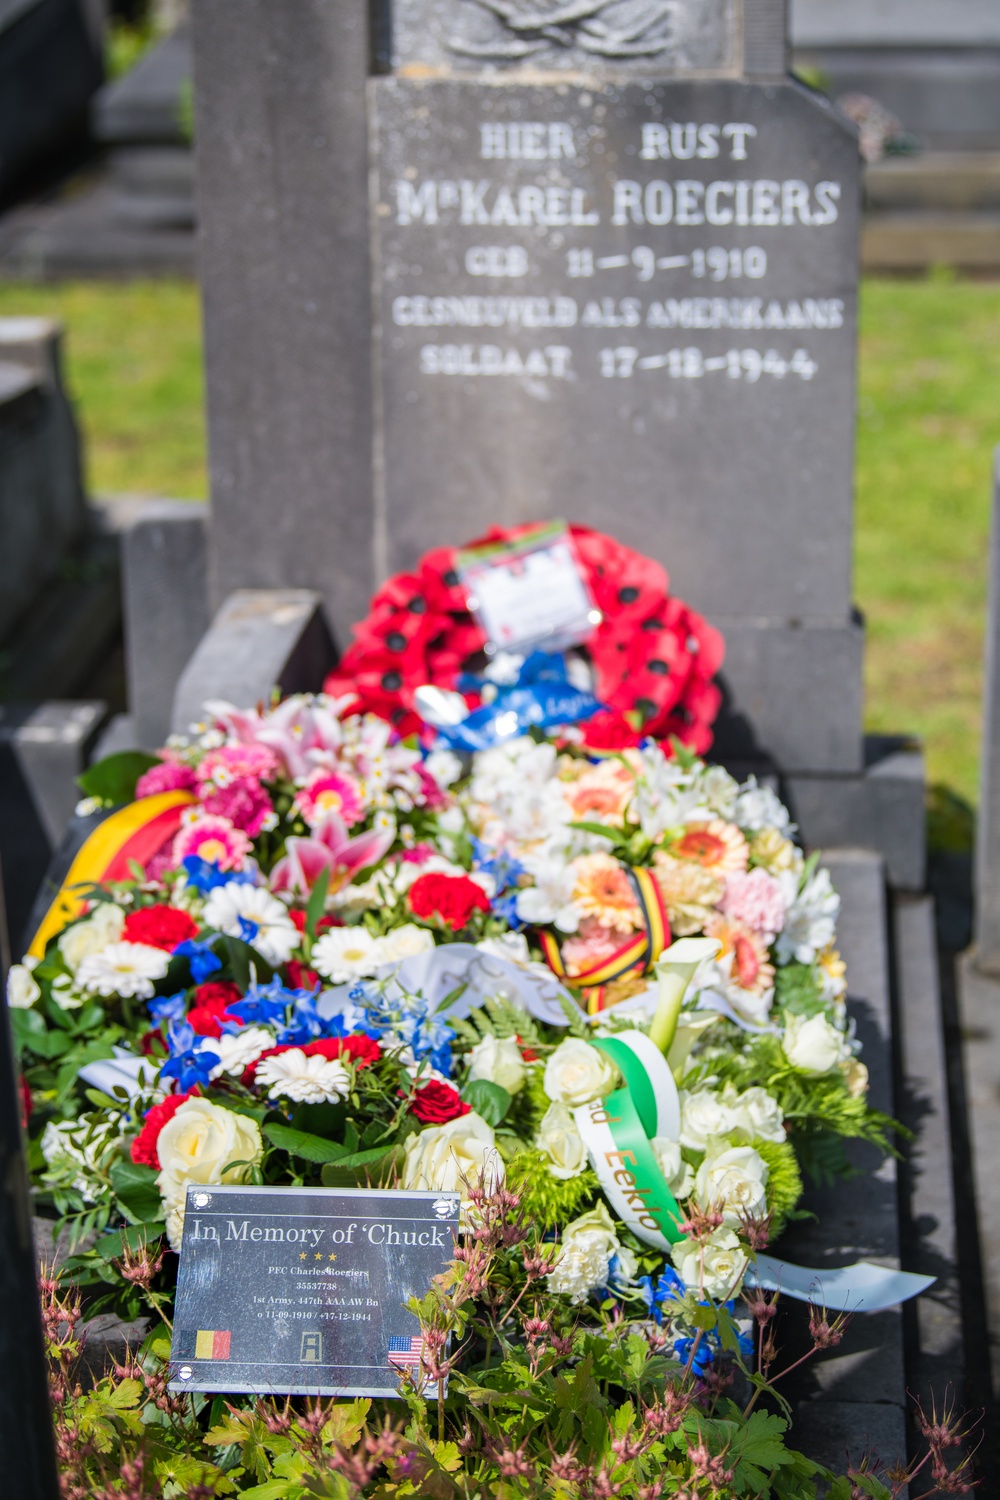 Service Members Conduct Isolated Grave Ceremonies in Belgium